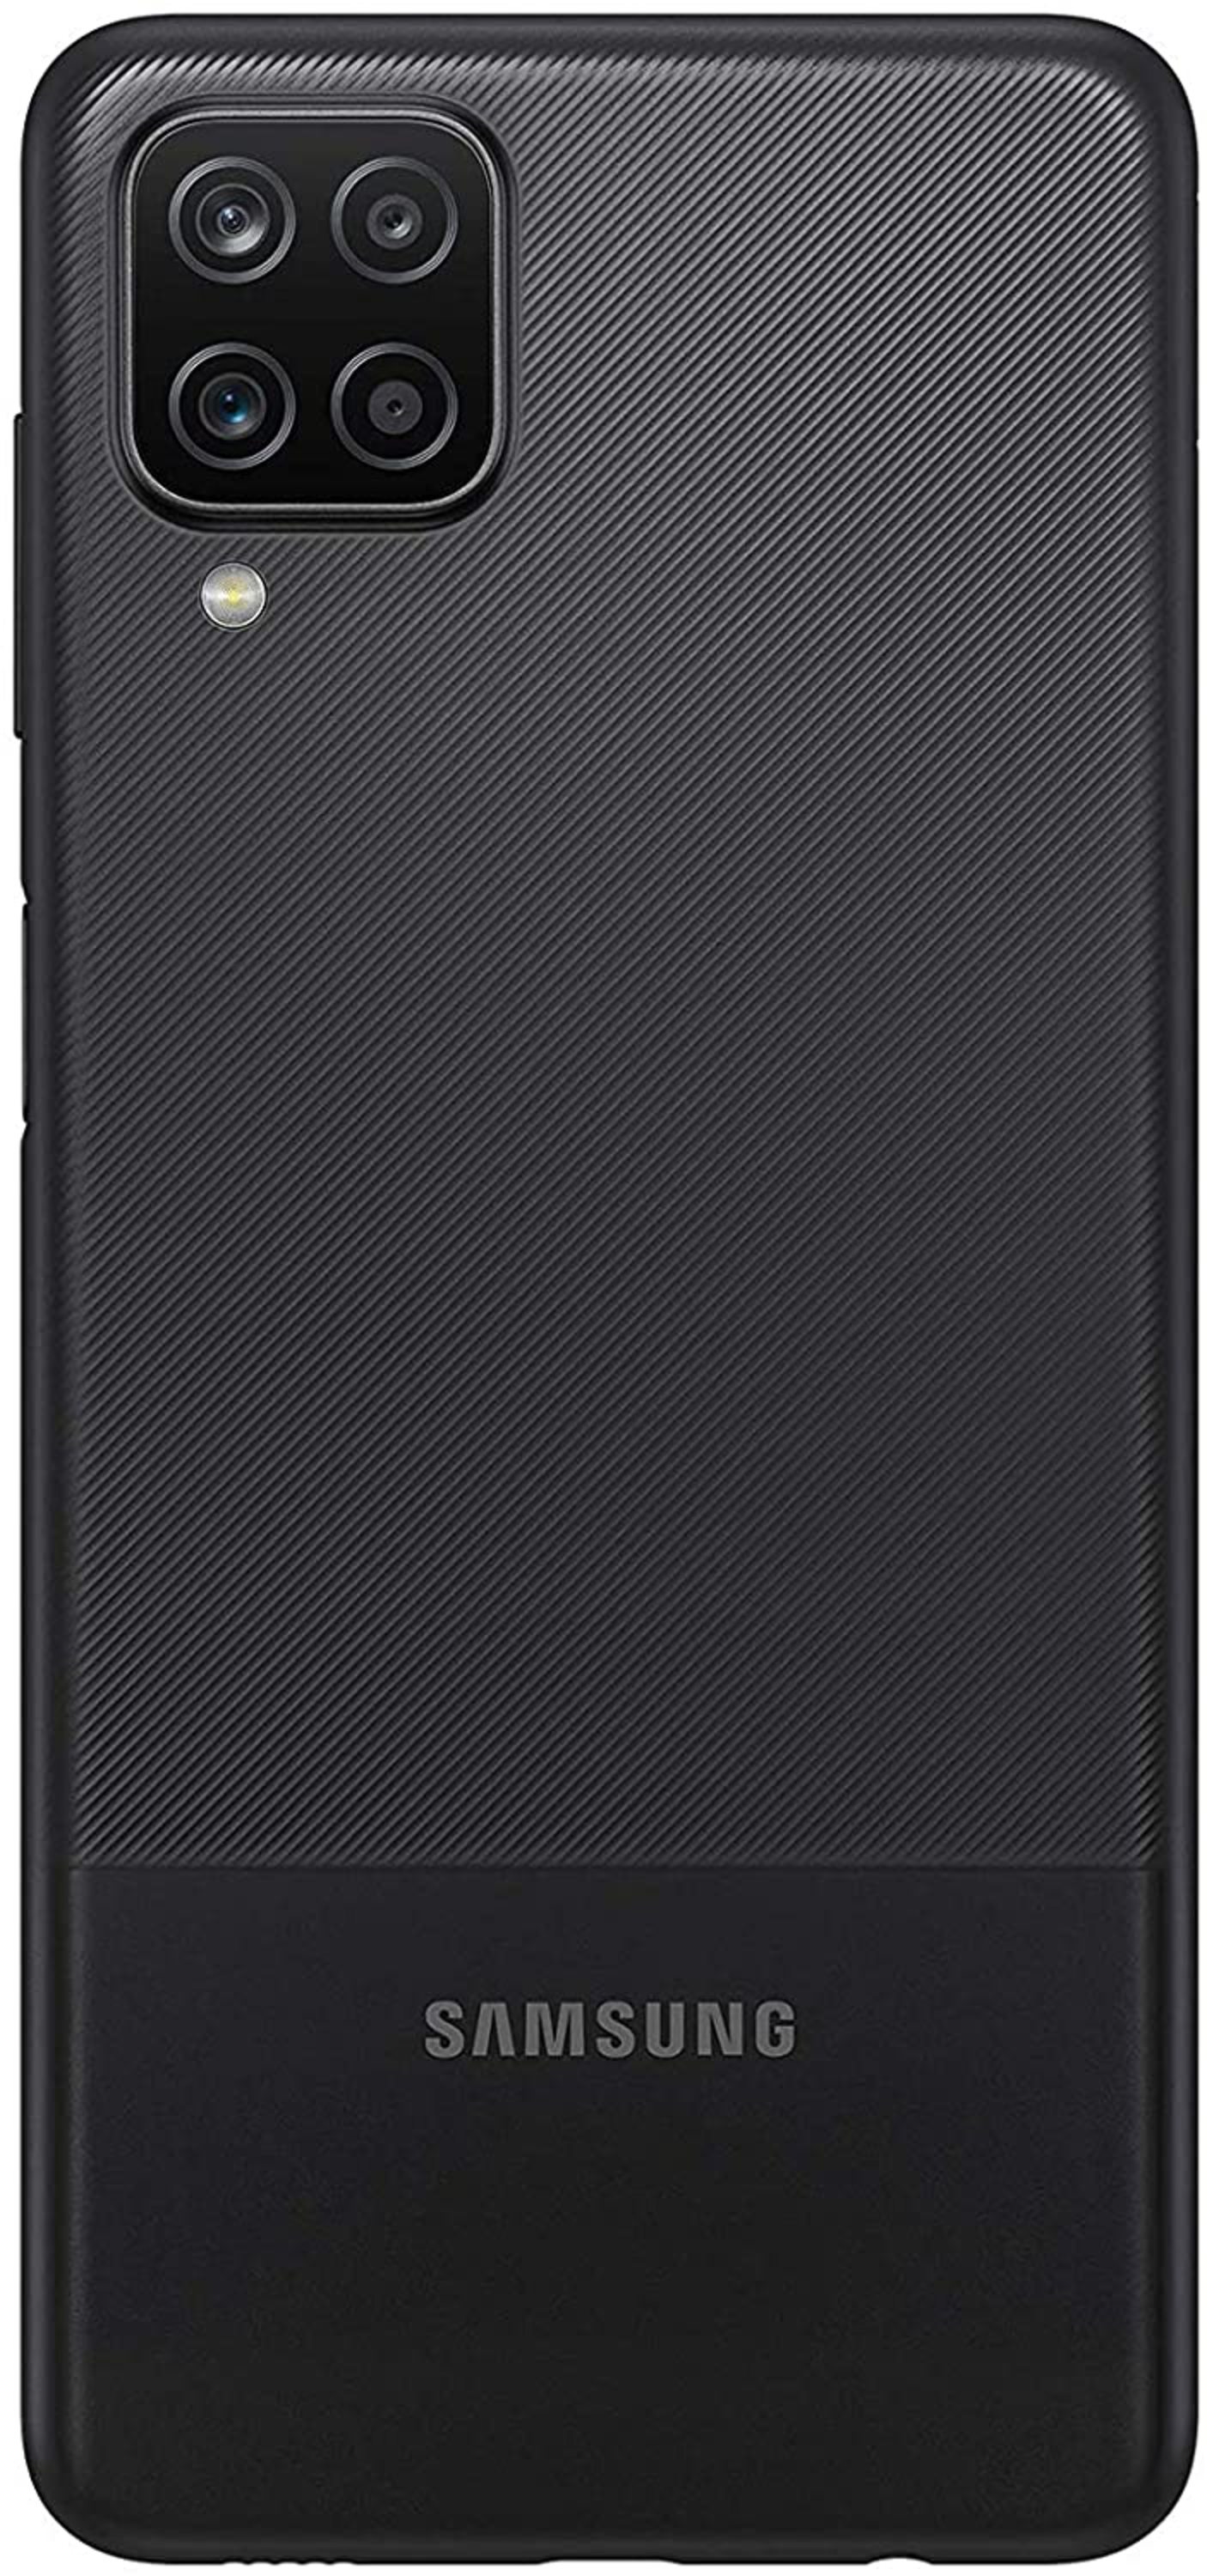 SAMSUNG Galaxy A12 A125U 32GB GSM / CDMA Unlocked Android Smartphone (US Version), Black - image 4 of 10